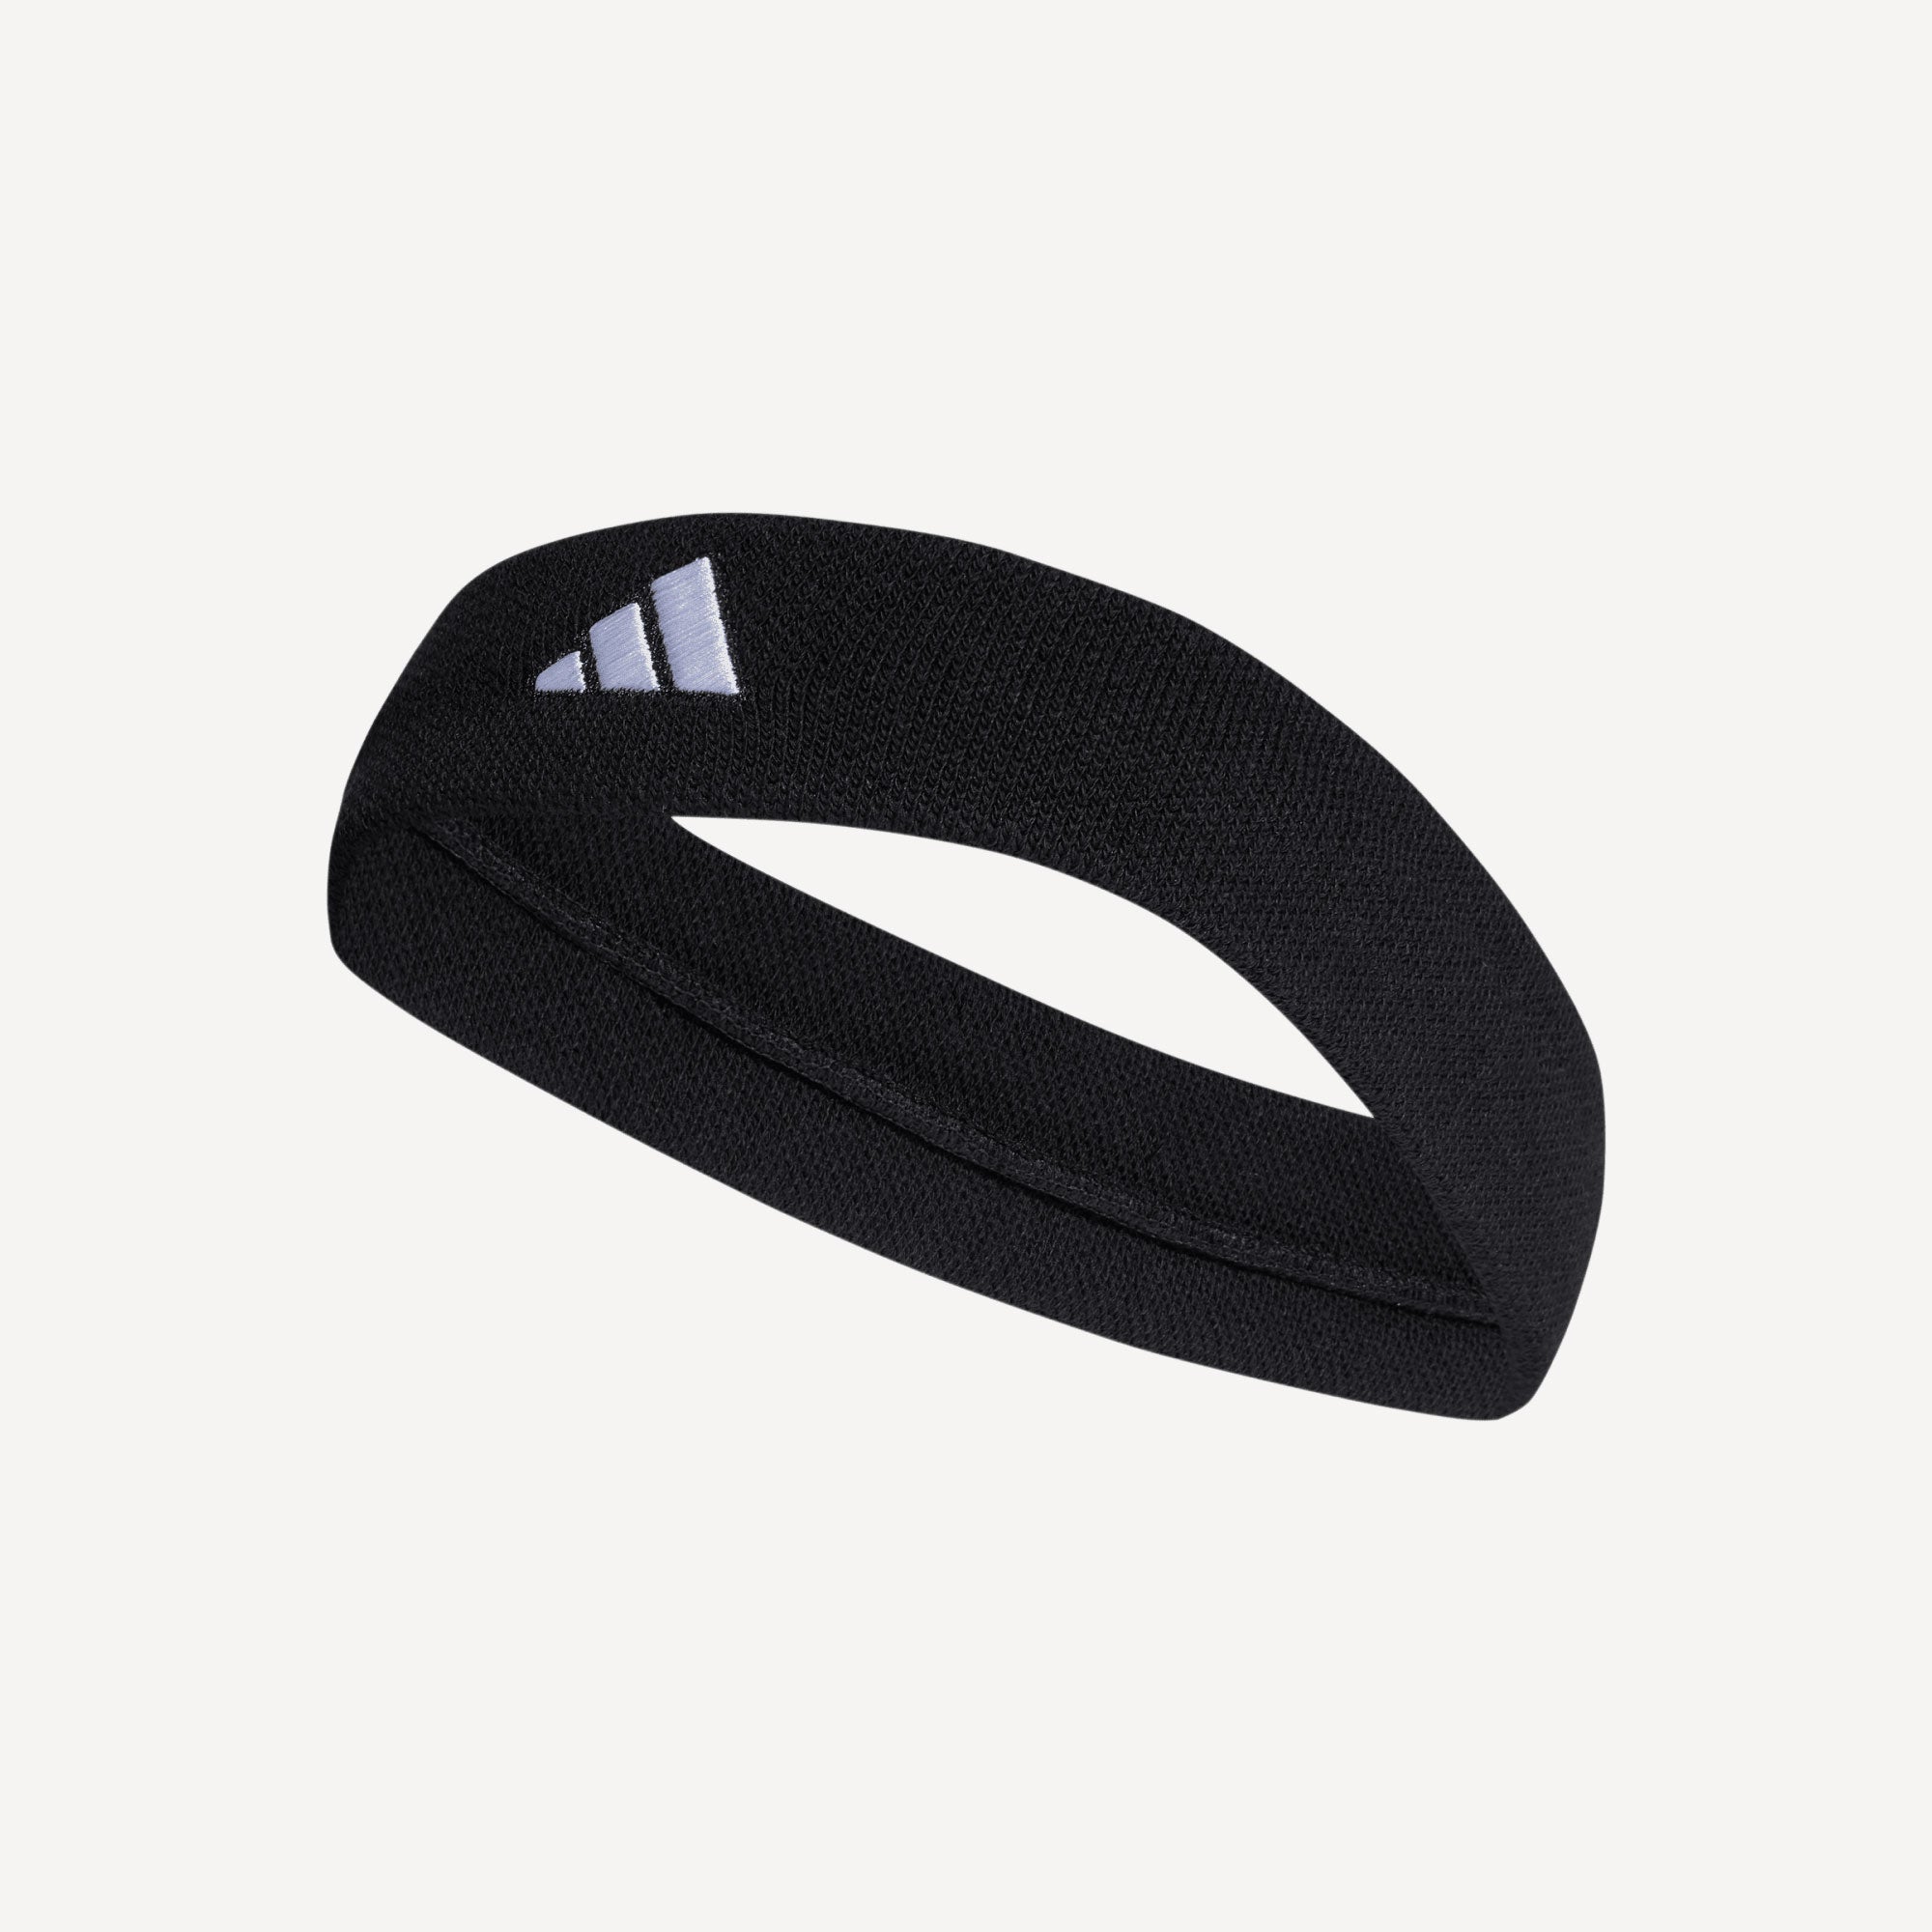 adidas Tennis Headband - Black (1)